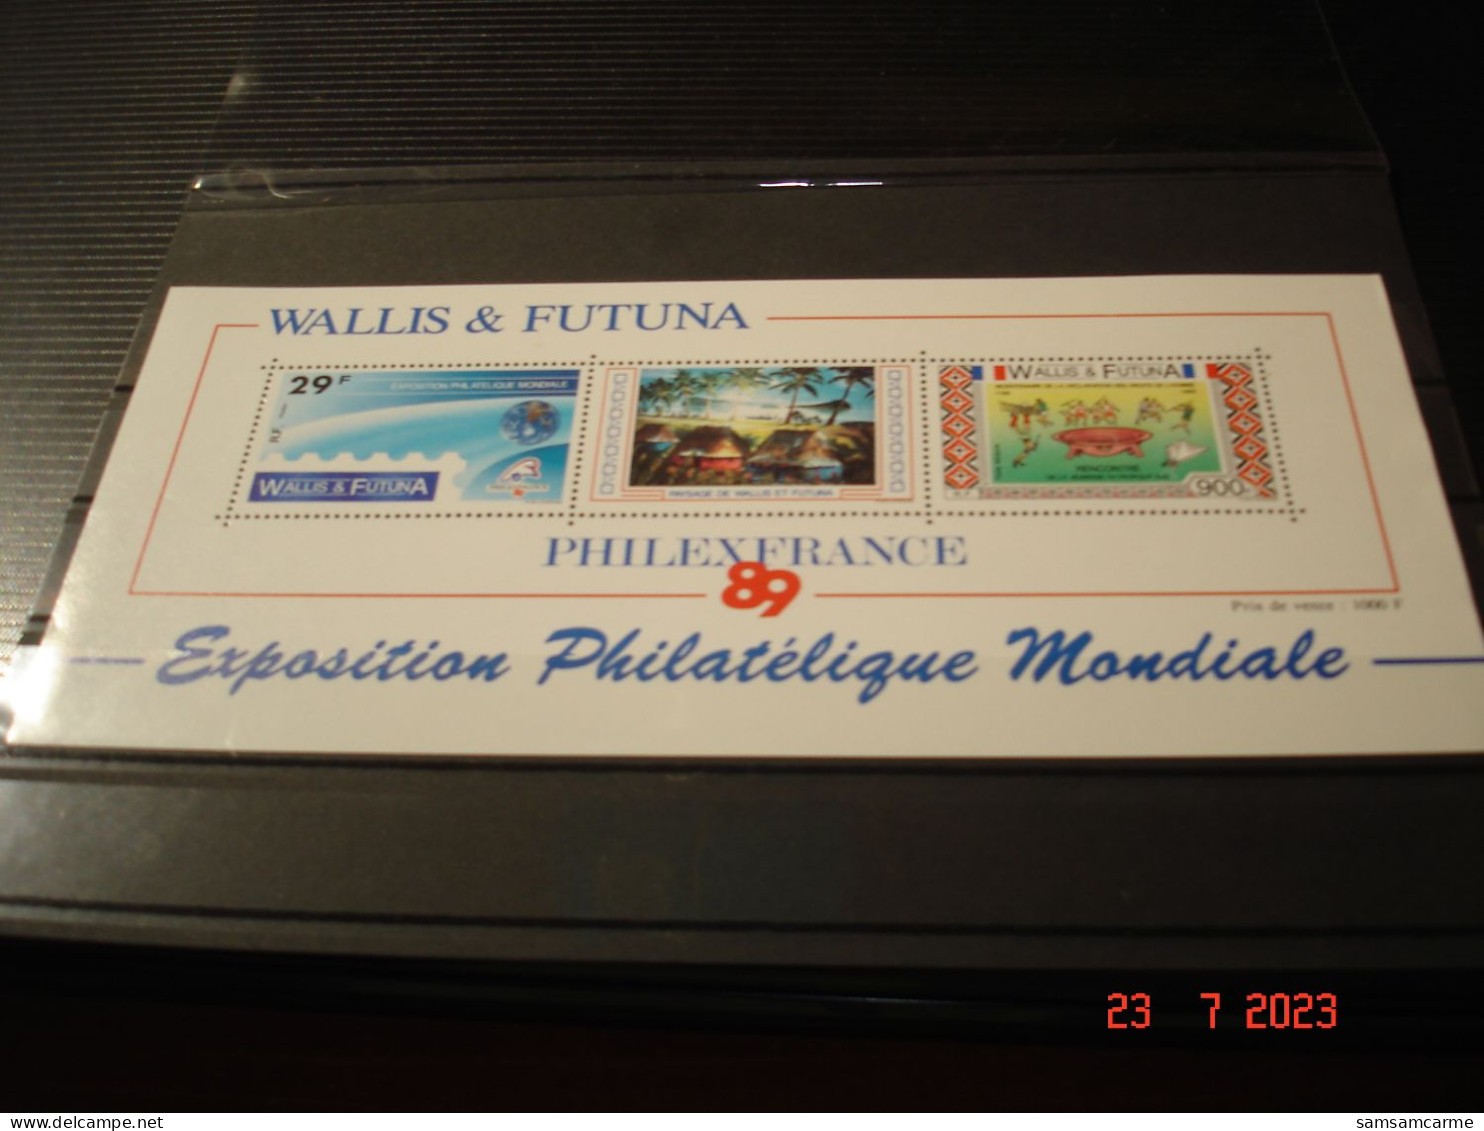 WALLIS ET FUTUNA    ANNEE  1989     BLOC FEUILLET NEUF N° 4    "  PHILEX FANCE 89 "  EXPOSITION PHILATELIQUE MONDIALE - Blocks & Kleinbögen